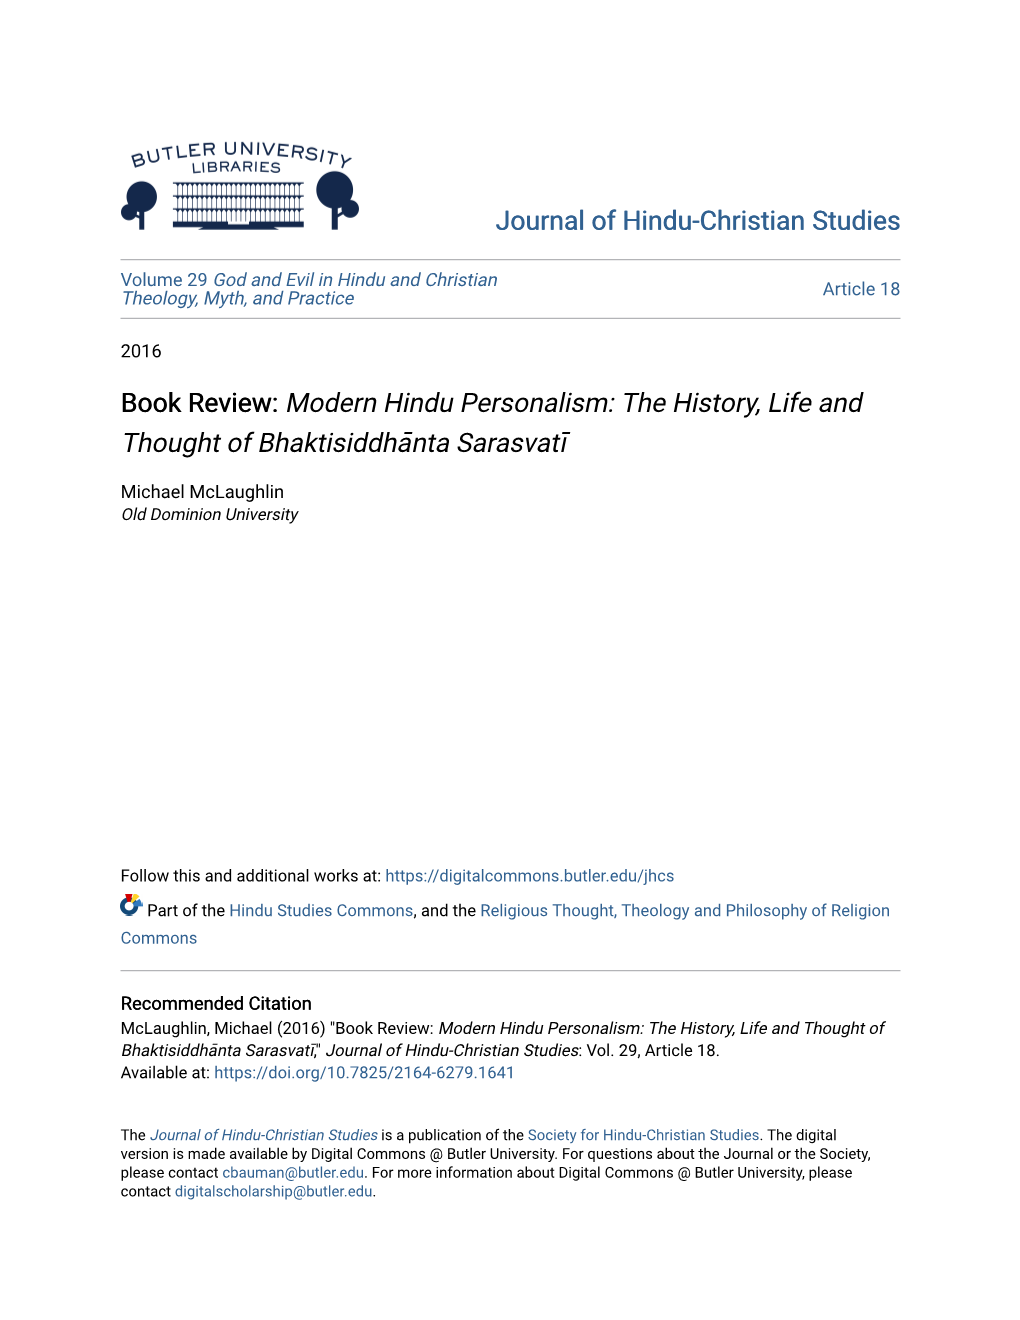 Book Review: Modern Hindu Personalism: the History, Life and Thought of Bhaktisiddhantā Sarasvatī